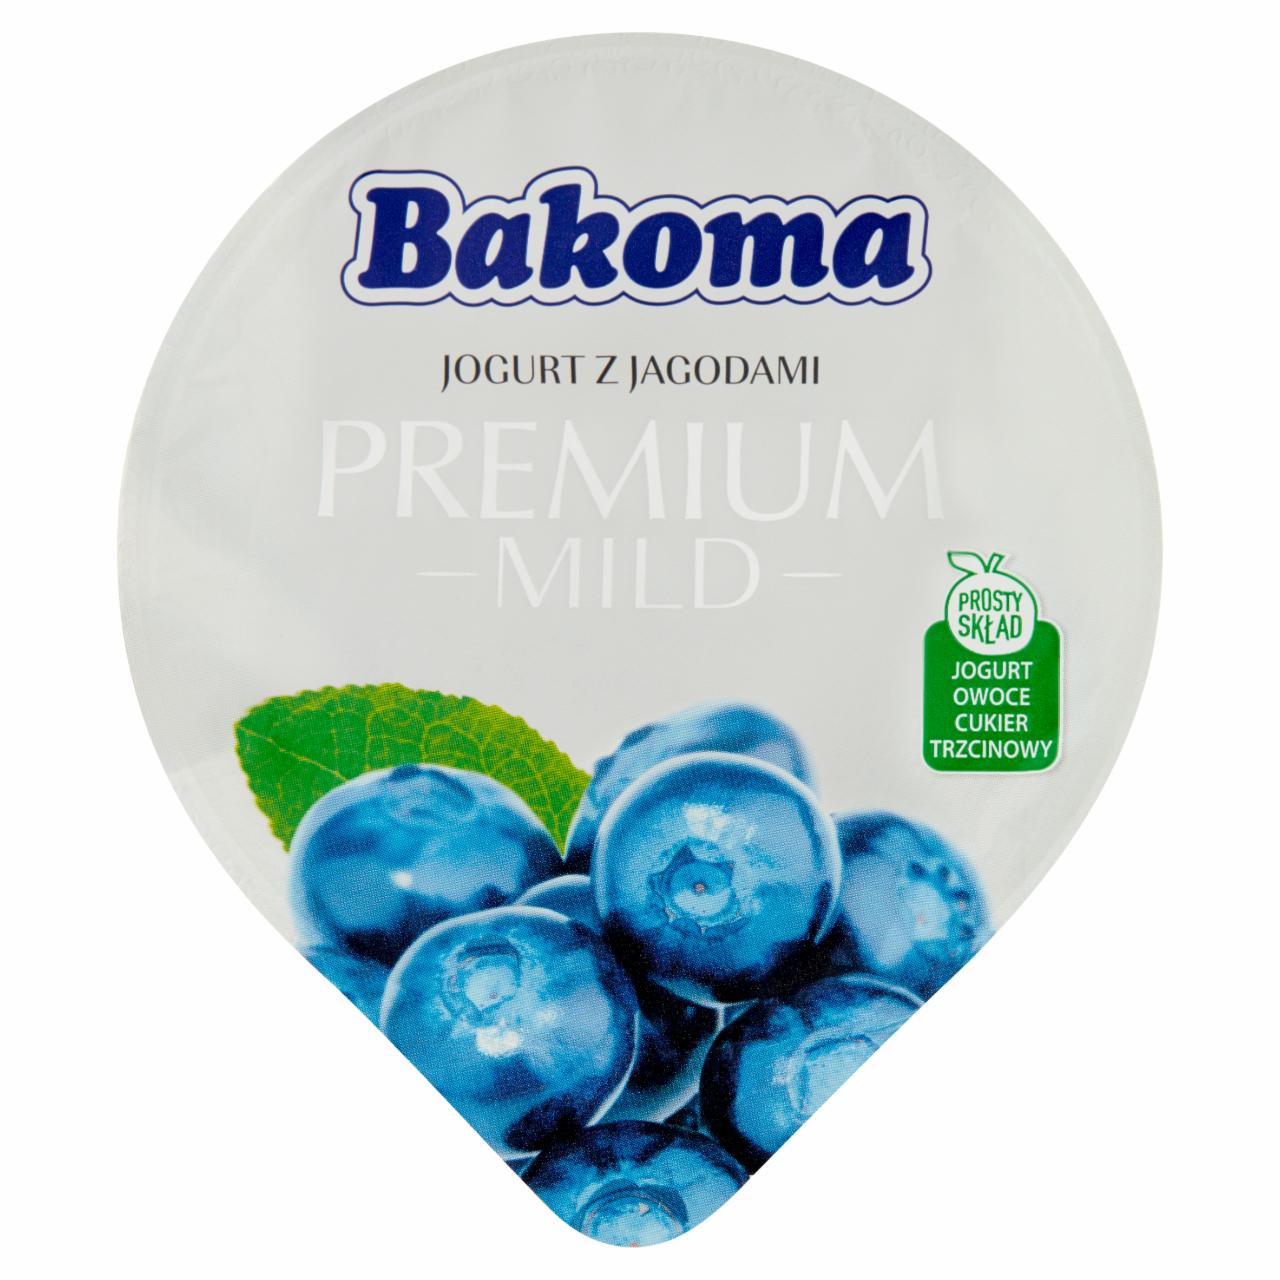 Zdjęcia - Bakoma Premium Mild Jogurt z jagodami 140 g